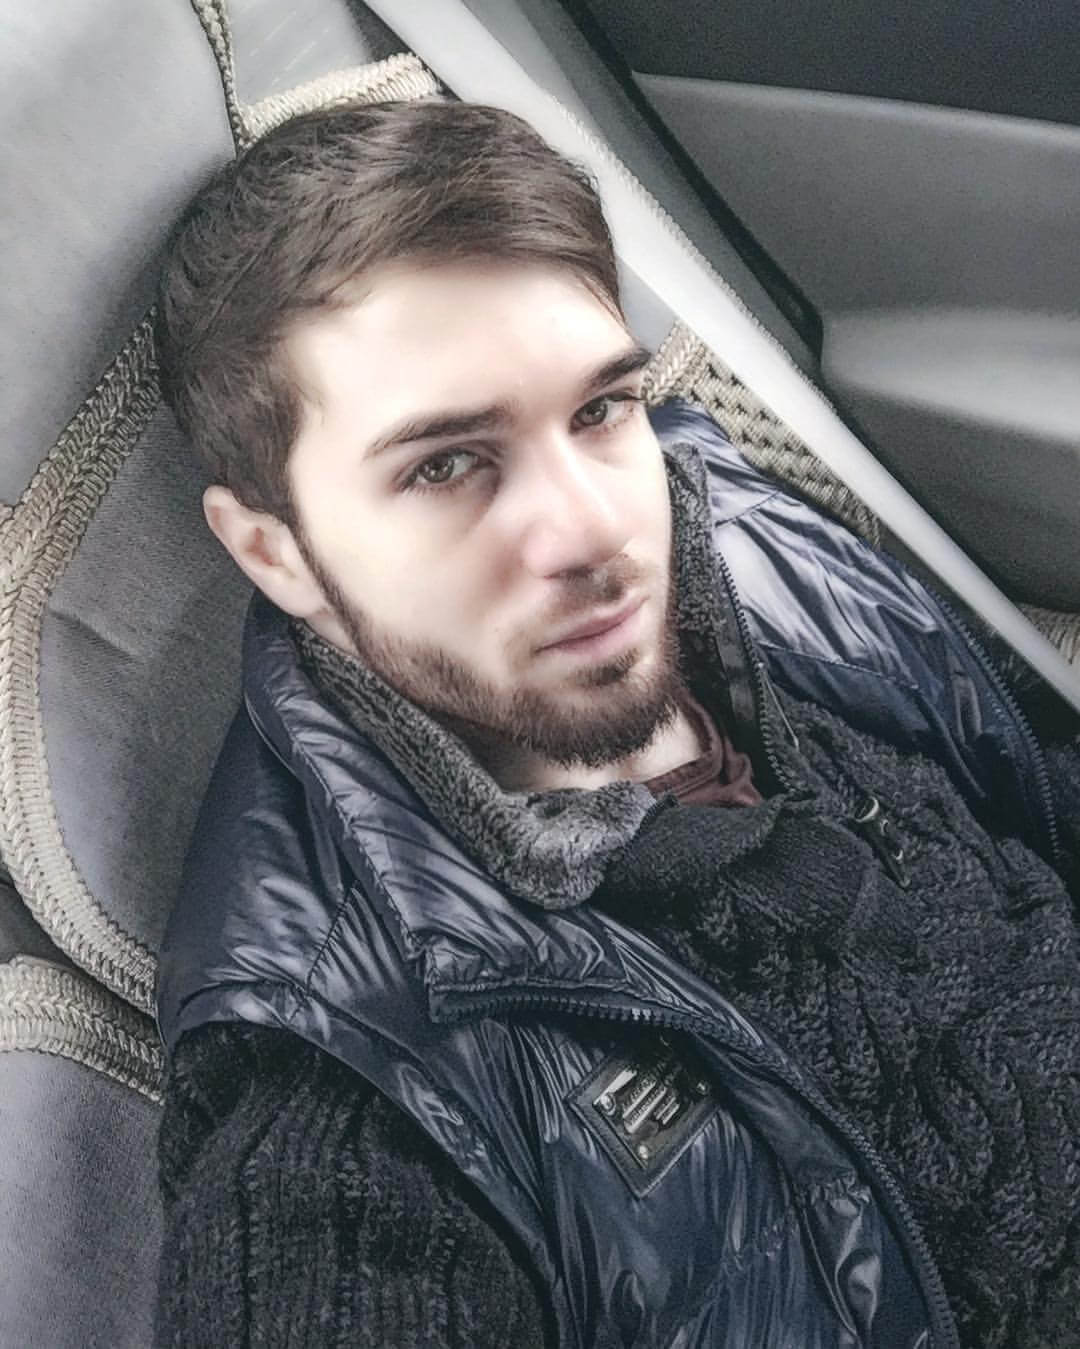 Zelim Bakaev in Cecenia, un anno fa spariva nel nulla la popstar russa dichiaratamente gay - 17097931 1788406071479425 1012066700282706581 o - Gay.it